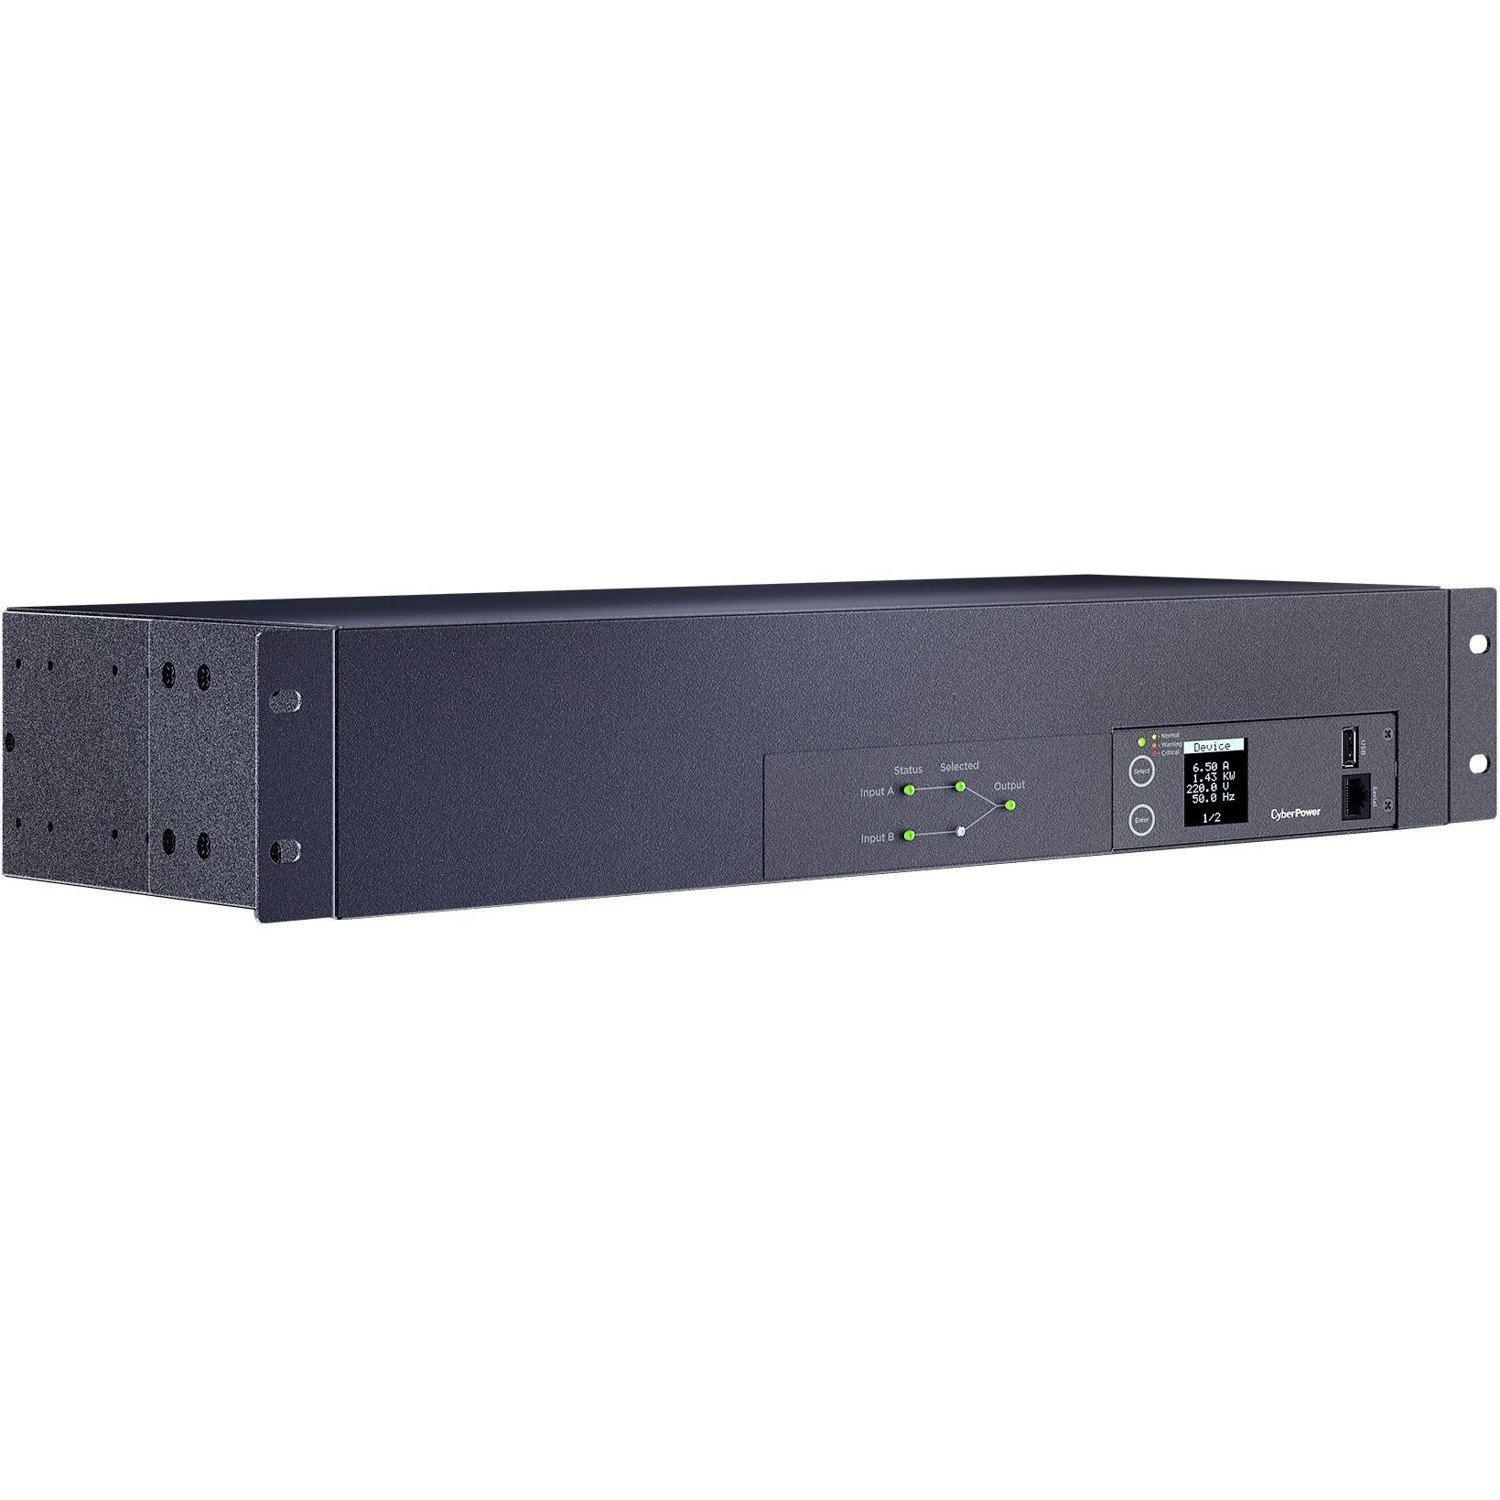 CyberPower Metered ATS PDU PDU24007 19-Outlets PDU